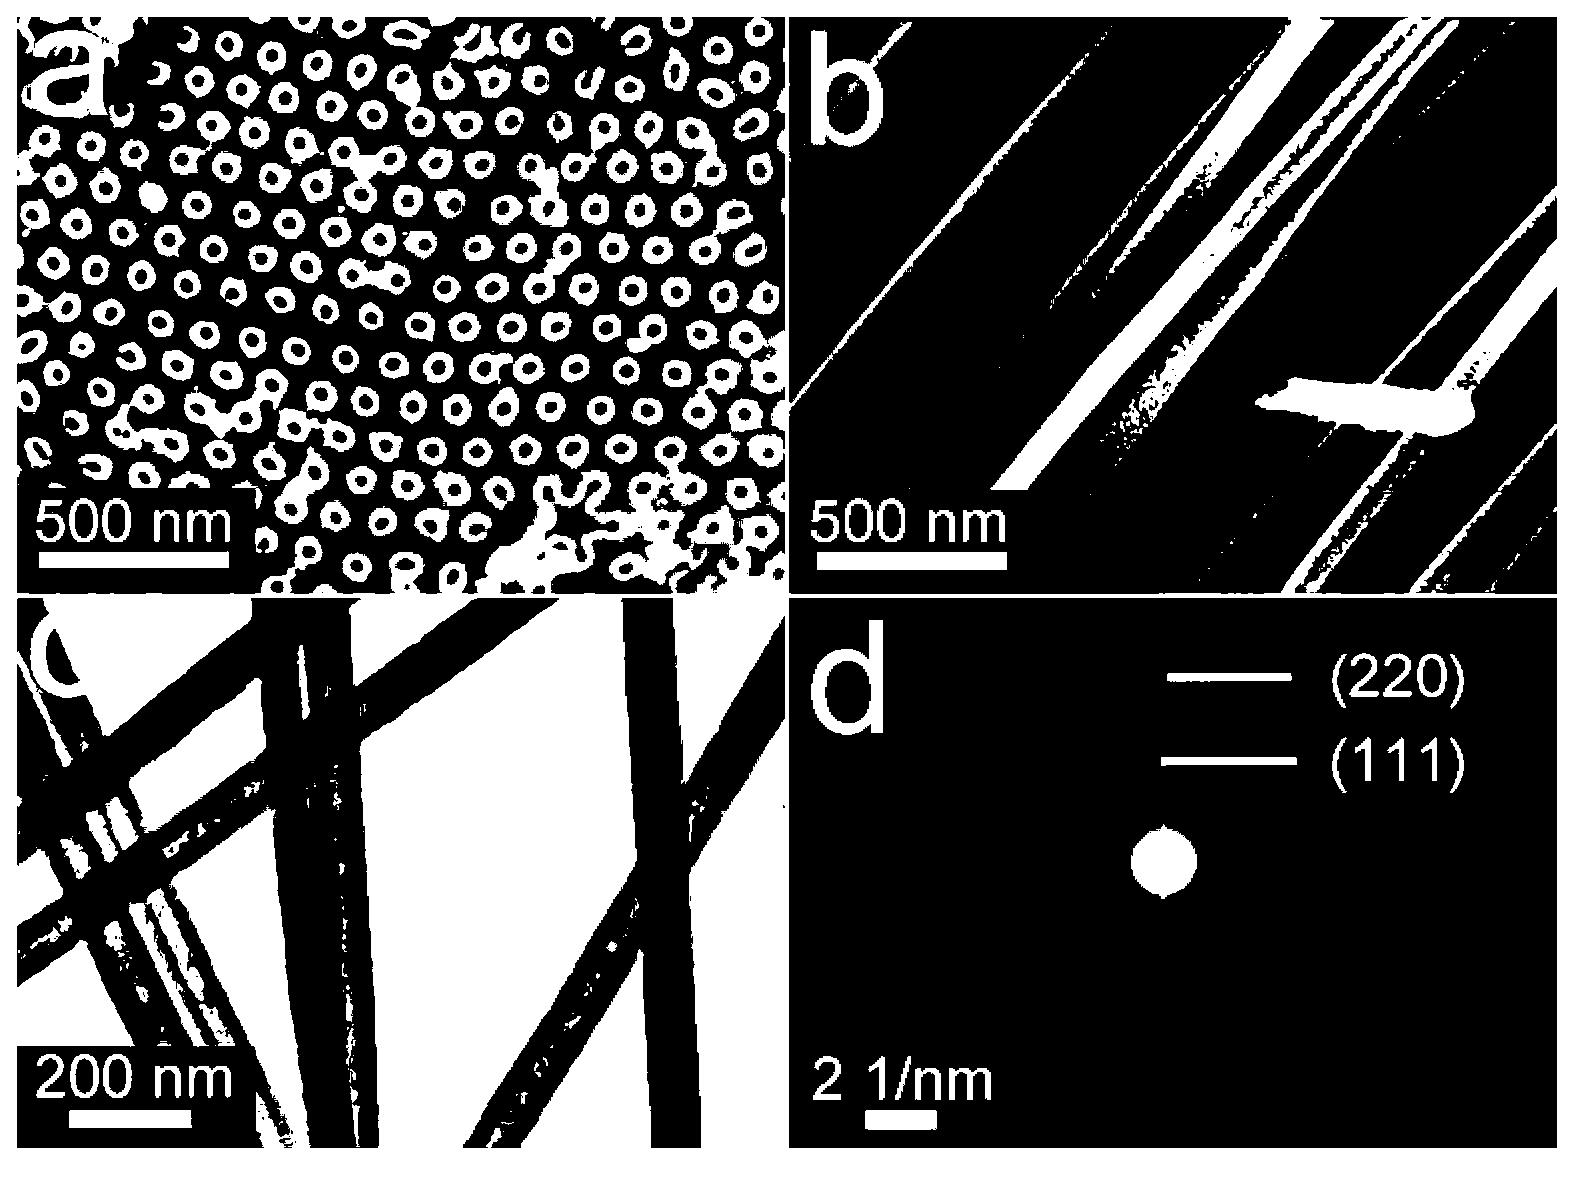 Method for preparing germanium nanotubes